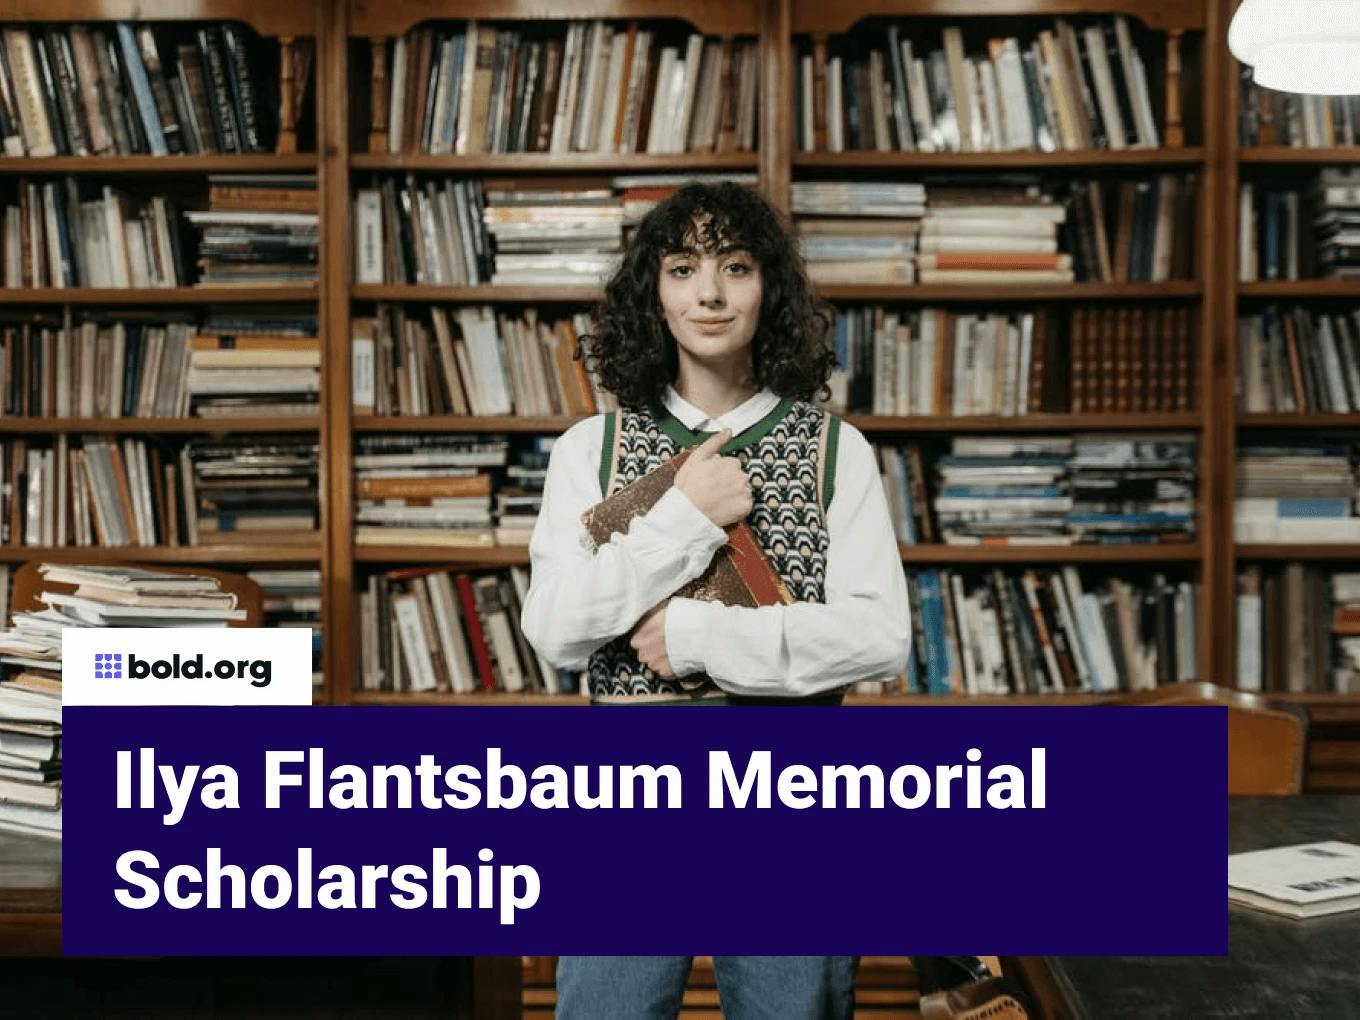 Ilya Flantsbaum Memorial Scholarship